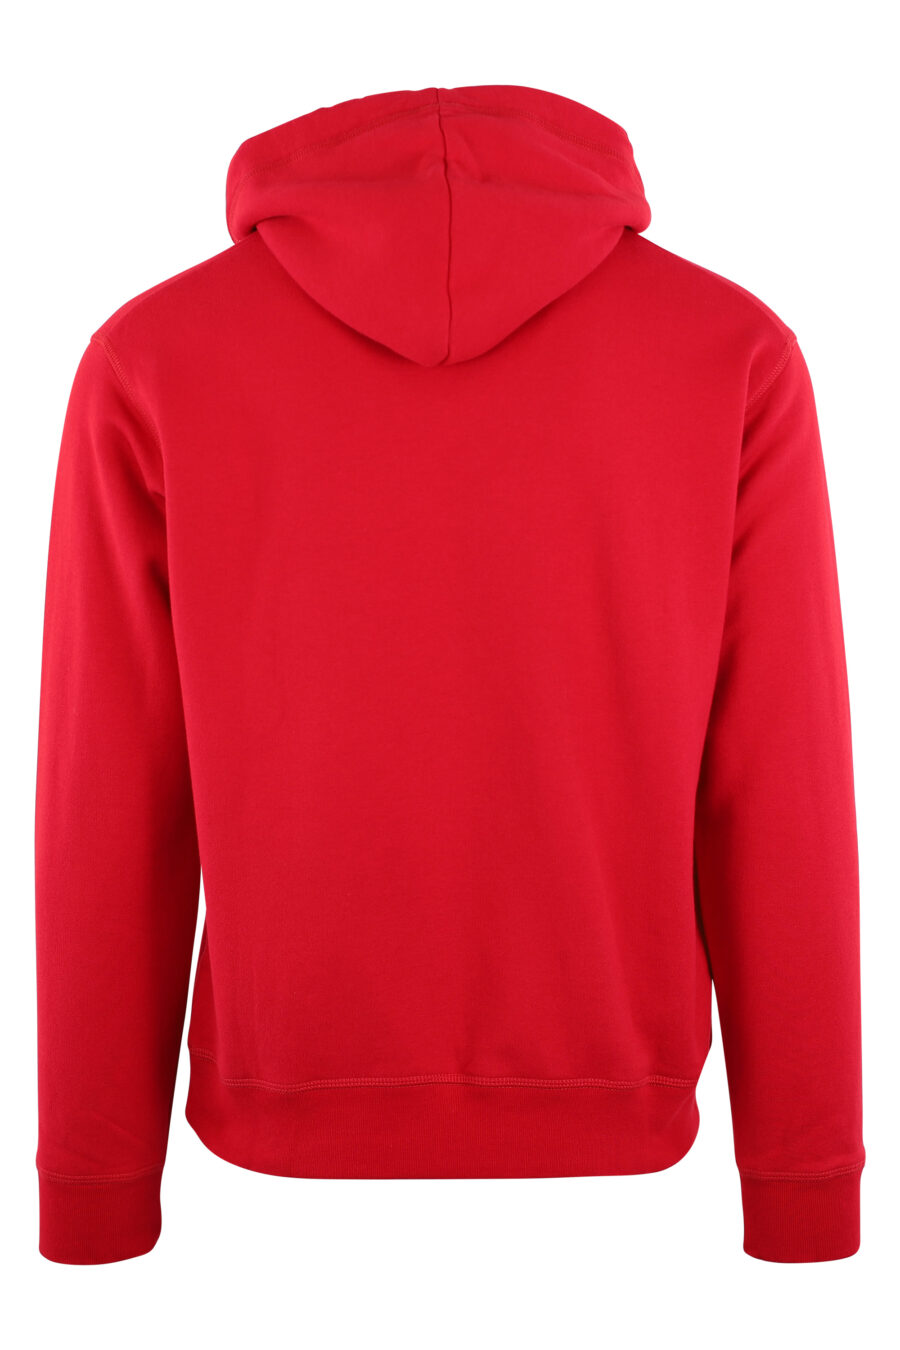 Sudadera con capucha roja oscura con logo "icon" - IMG 3155